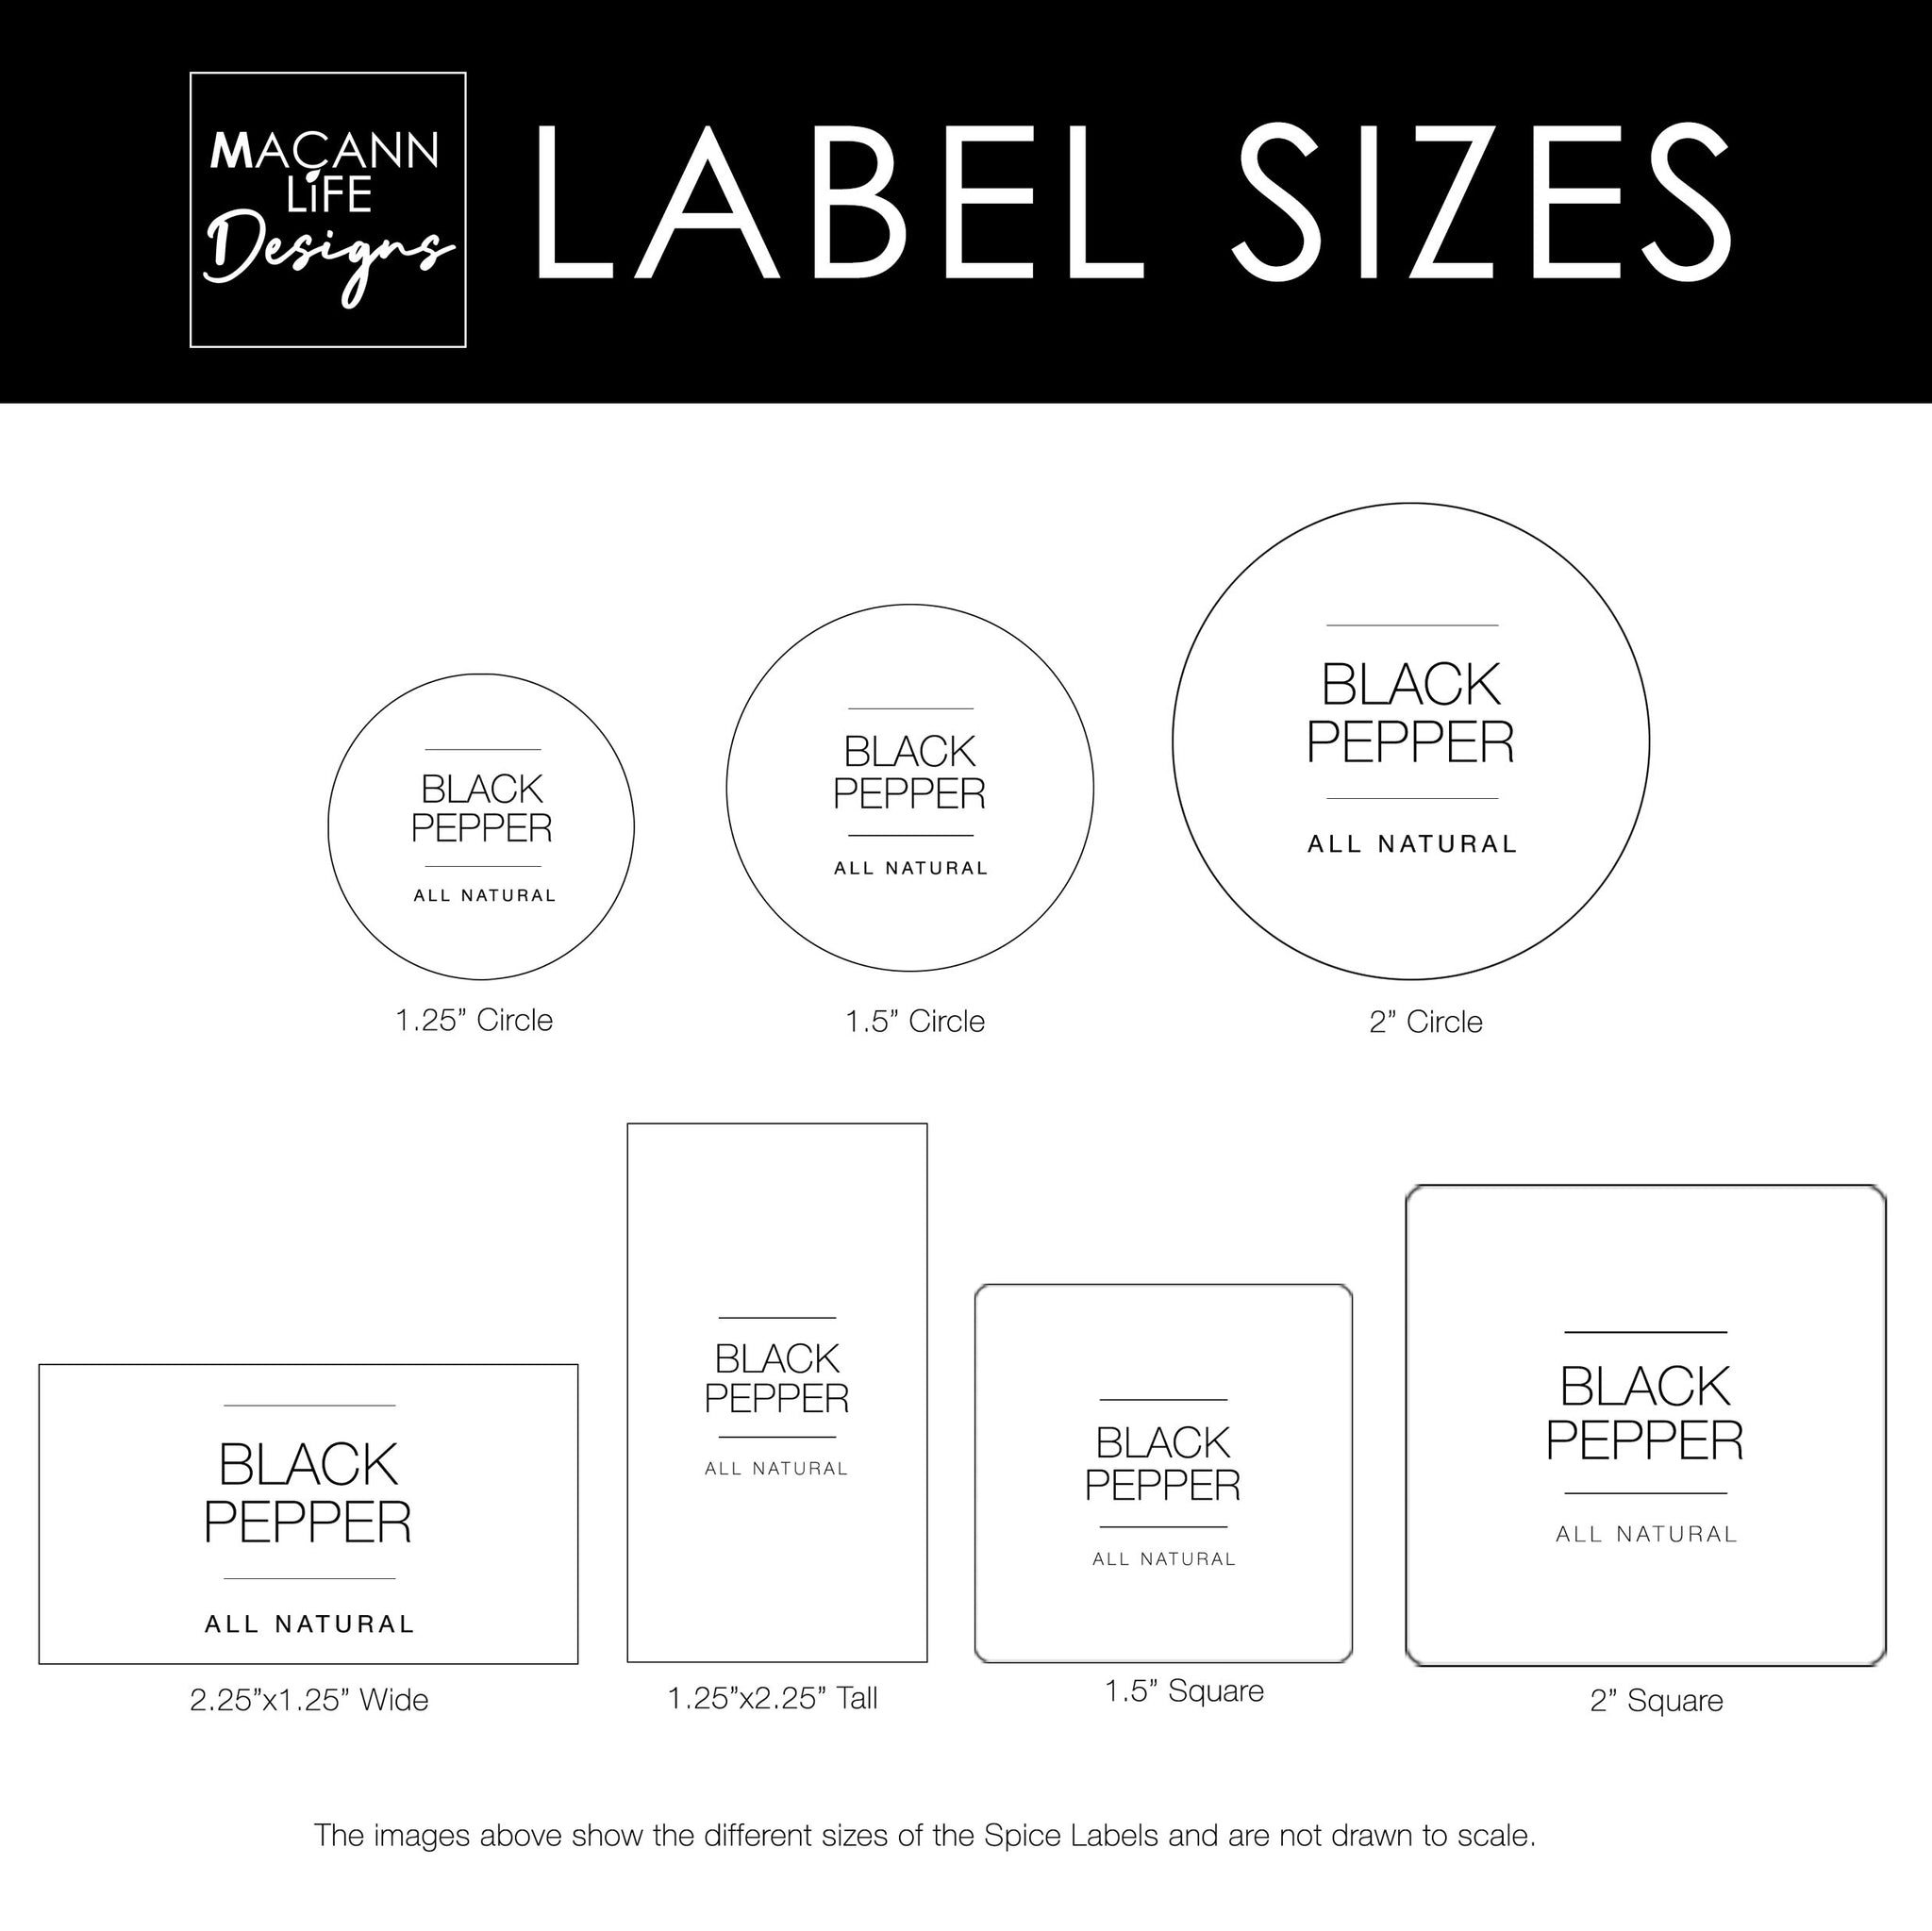 459 Minimalist Spice Label Set, White Text on Black Vinyl